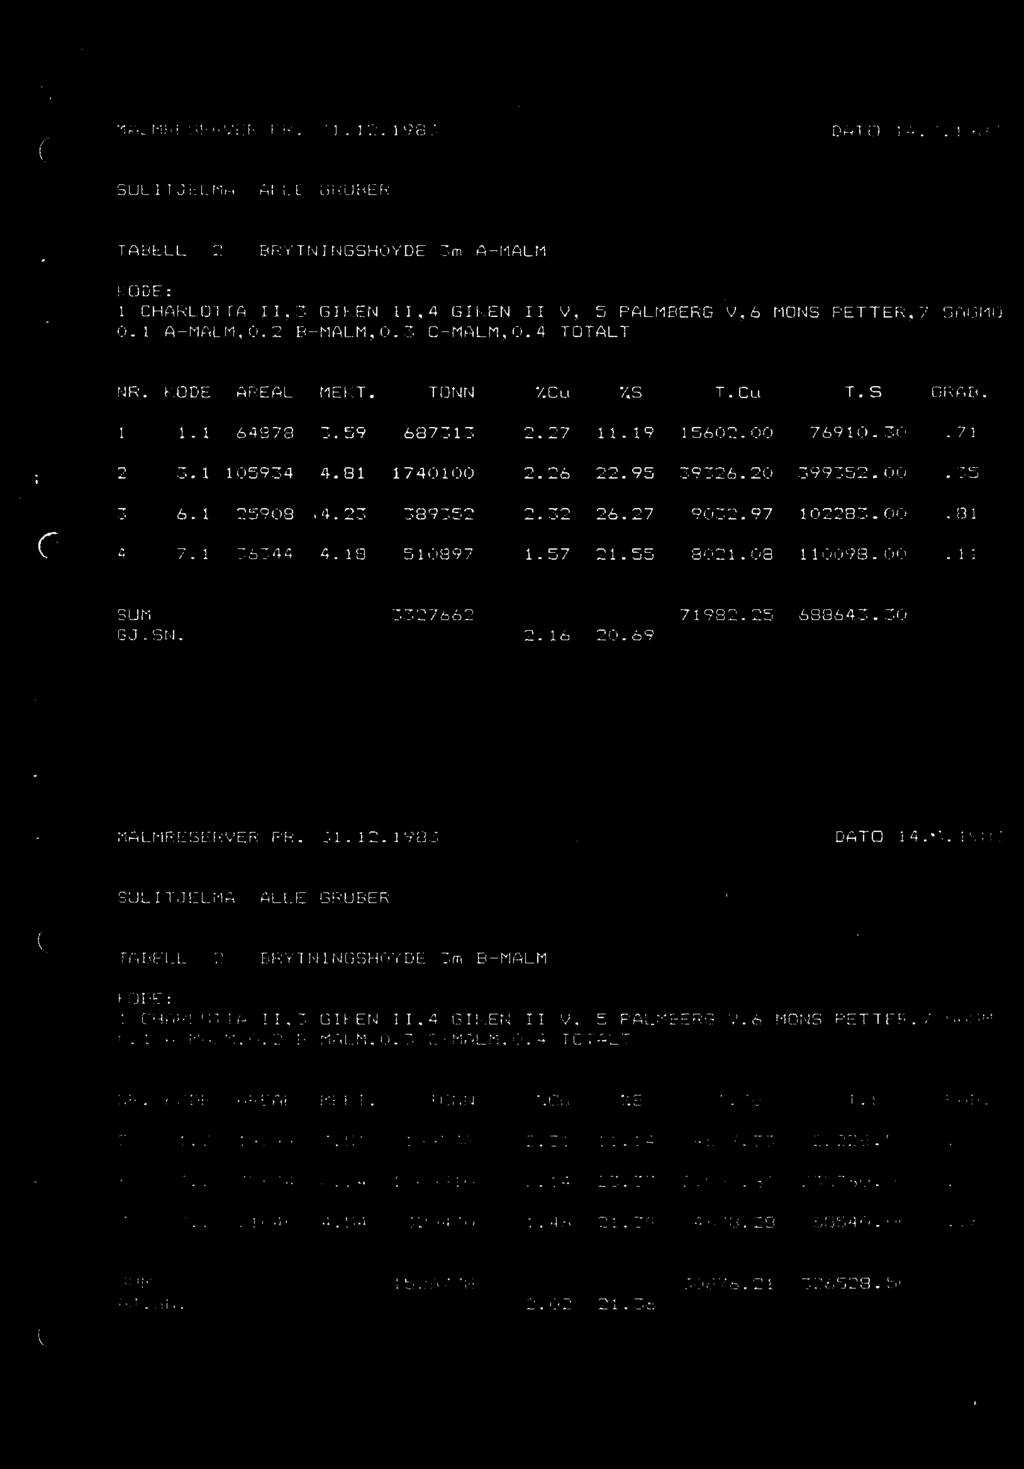 MALMRESERVER PR. 31.12.1983 DATO 14.3.1993 TABELL 2 BRYTNINGSHOYDE 3m A-MALM 1 CHARLOTTA 11,3 GIKEN 11,4 GIKEN II V, 5 PALMBERG V,6 MONS PETTER,7 SAGMO 0.1 A-MALM,0.2 B-MALM,0.3 C-MALM,0.4 TOTALT NR.